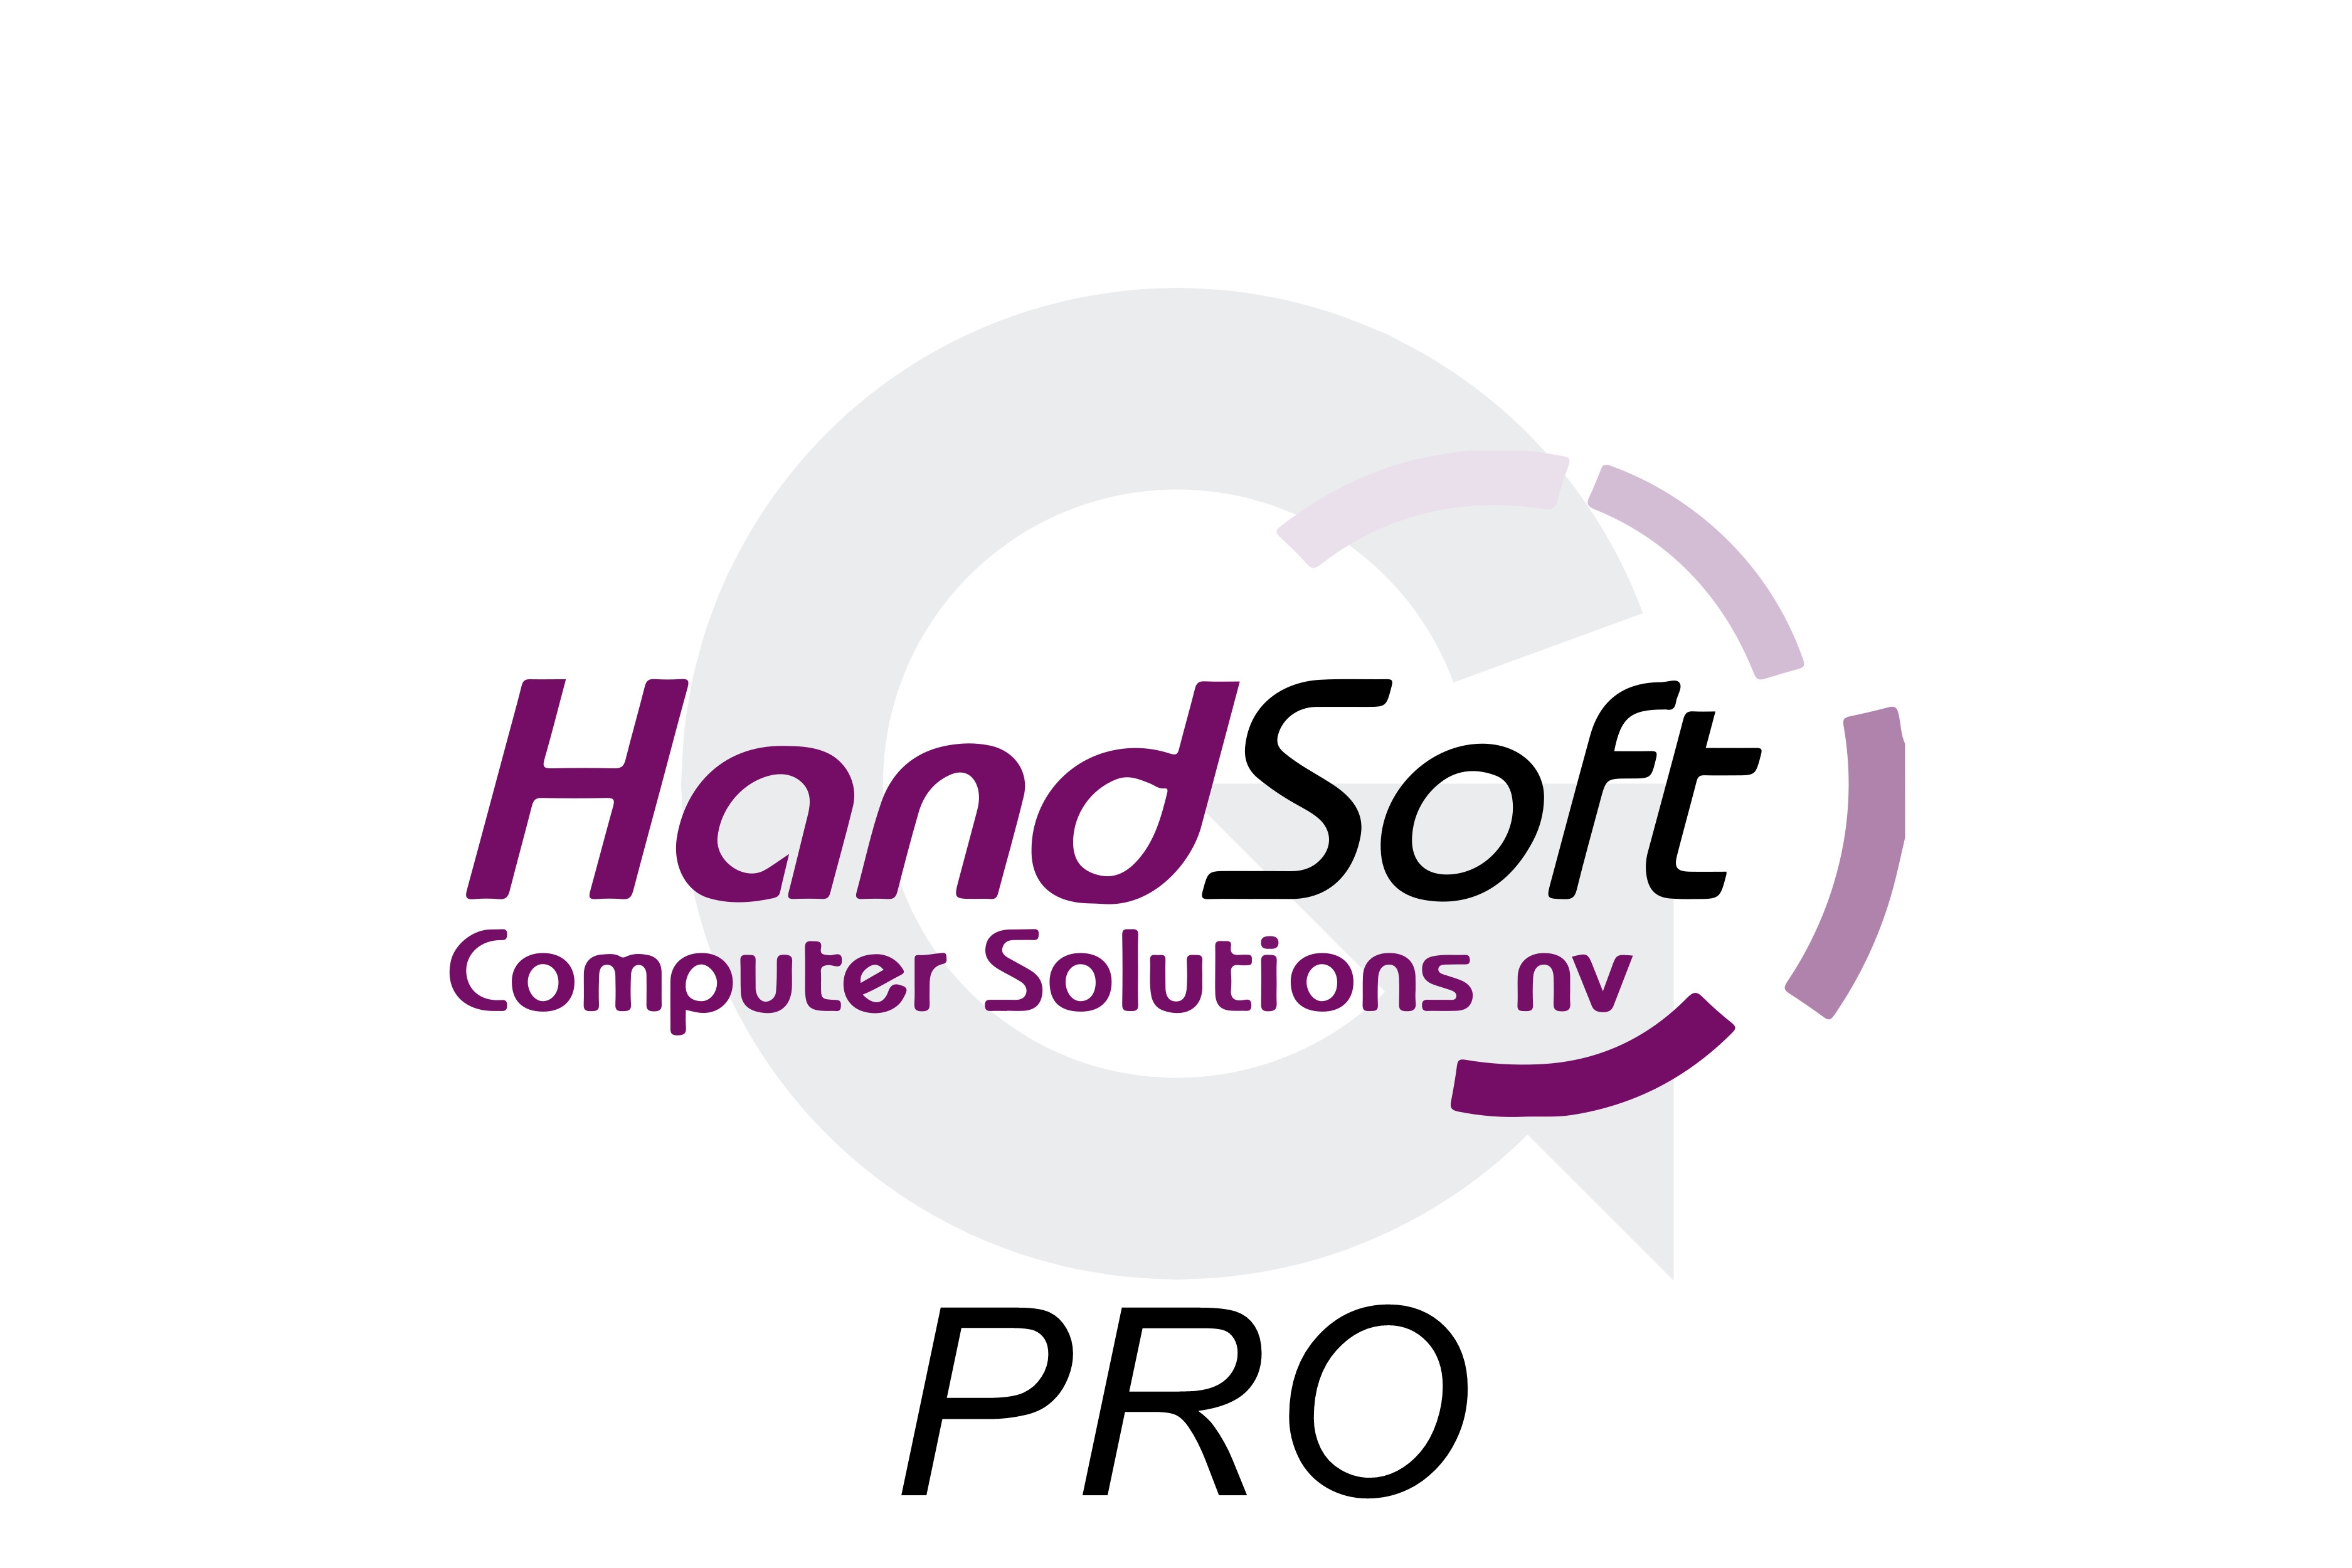 Handsoft Pro